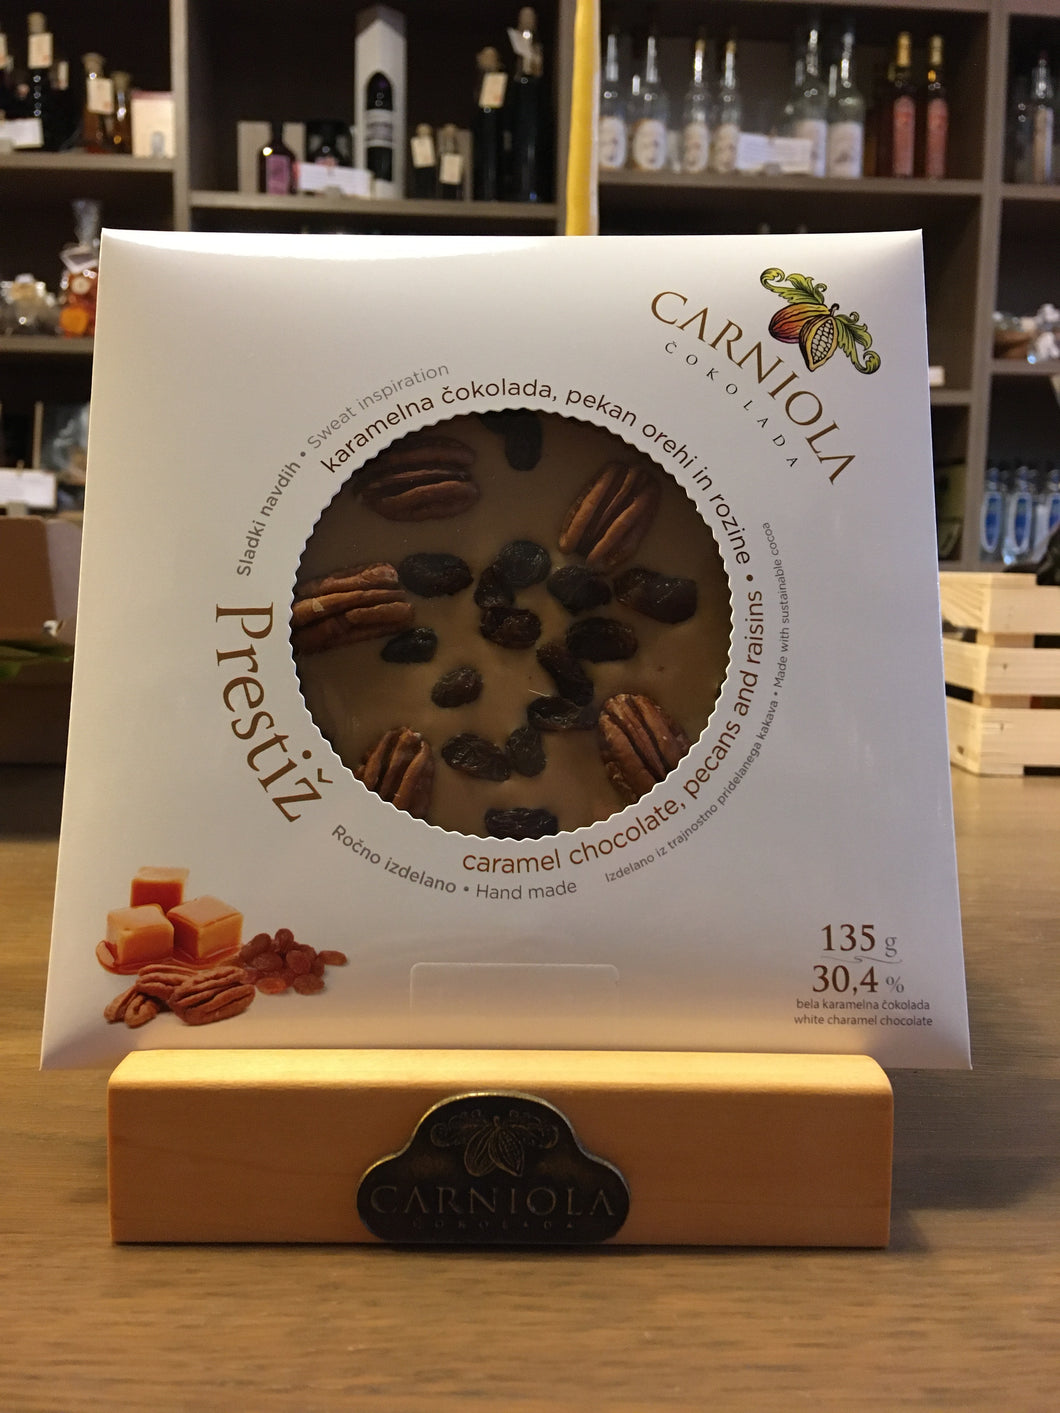 Carniola chocolate Prestige